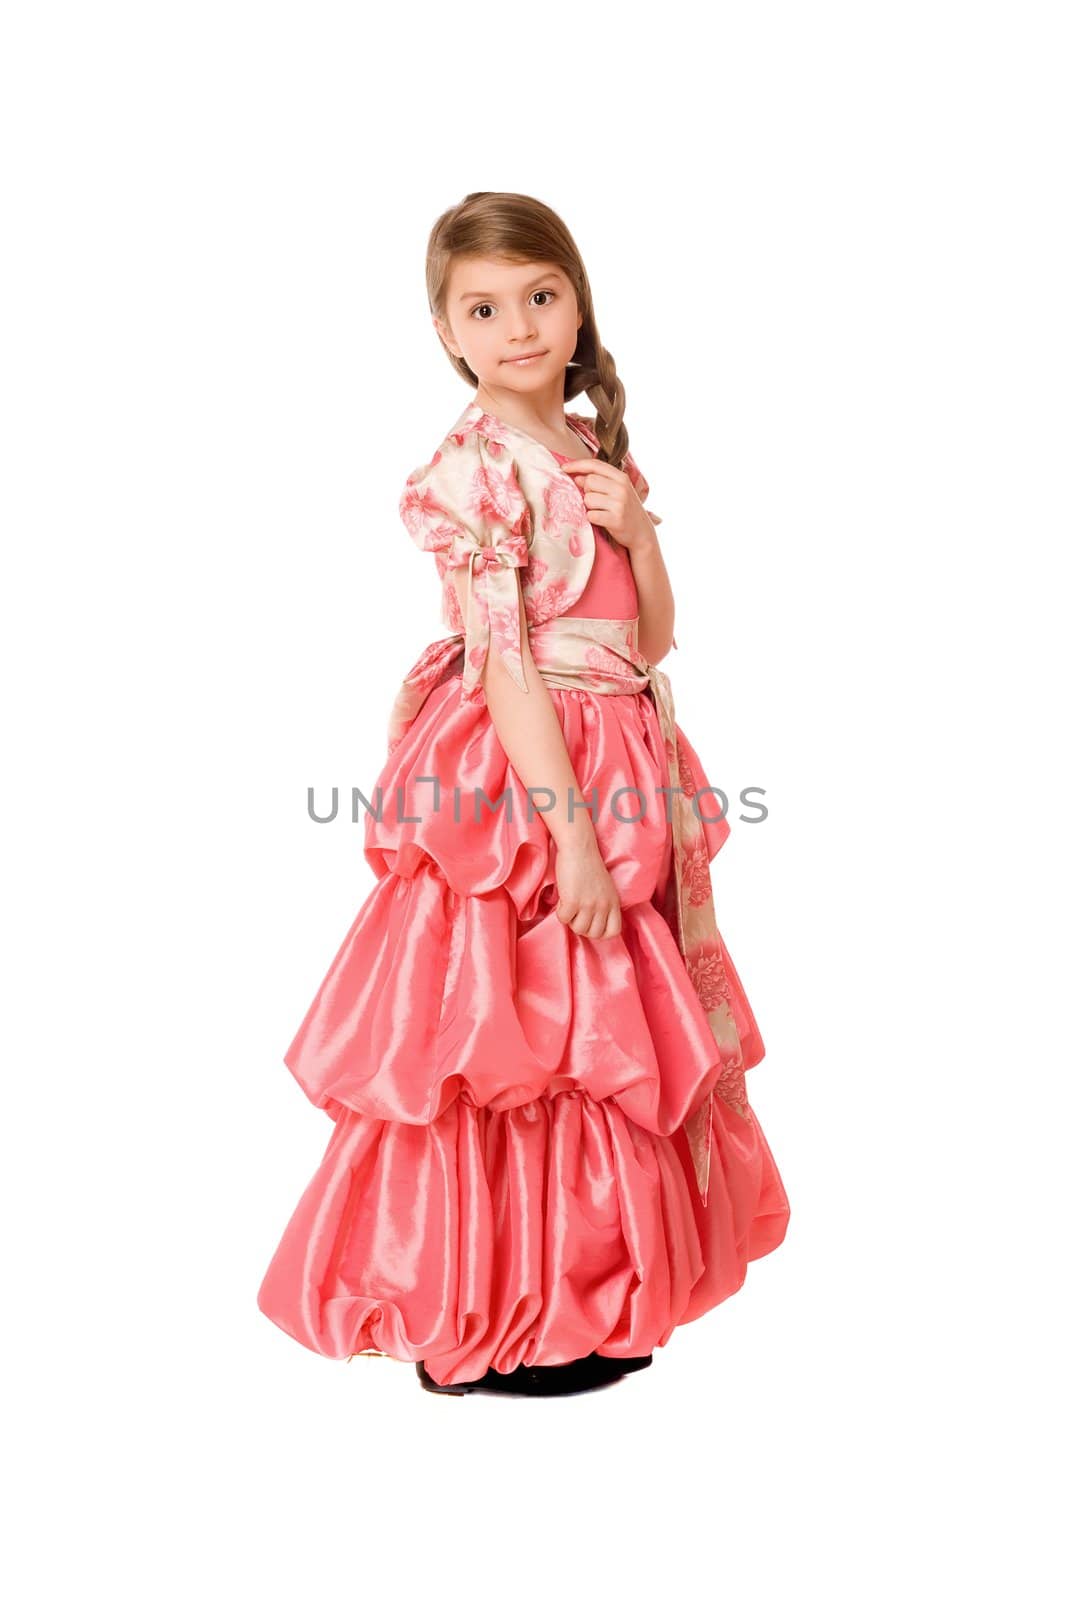 Lovely little girl in a long dress by acidgrey